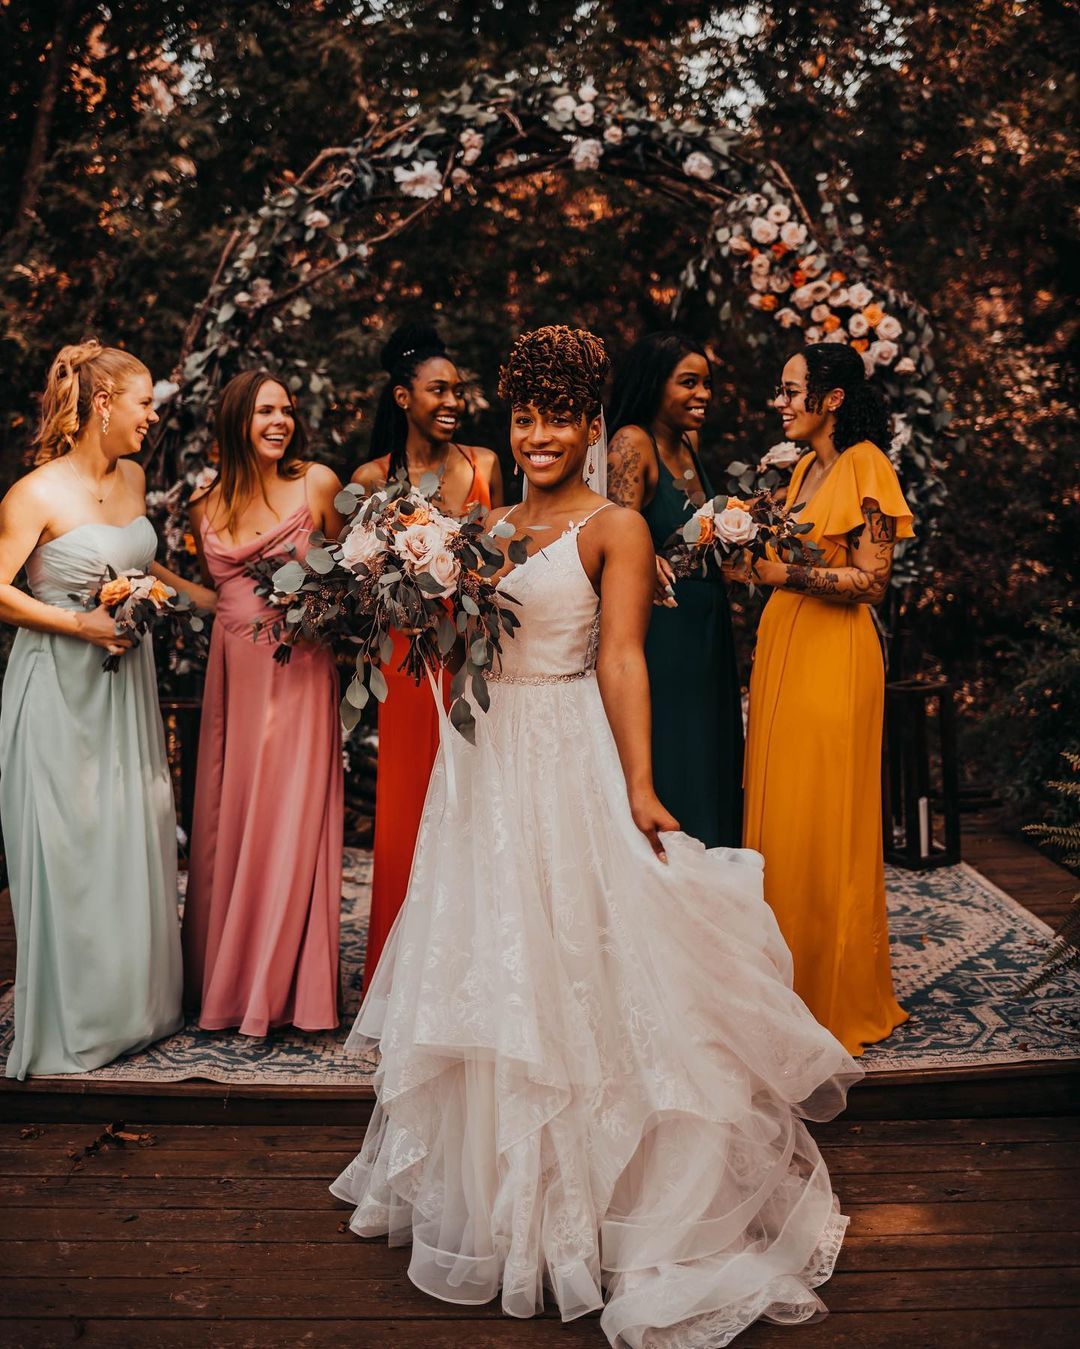 Fall Wedding Color Ideas & Inspiration - Rustic Wedding Chic